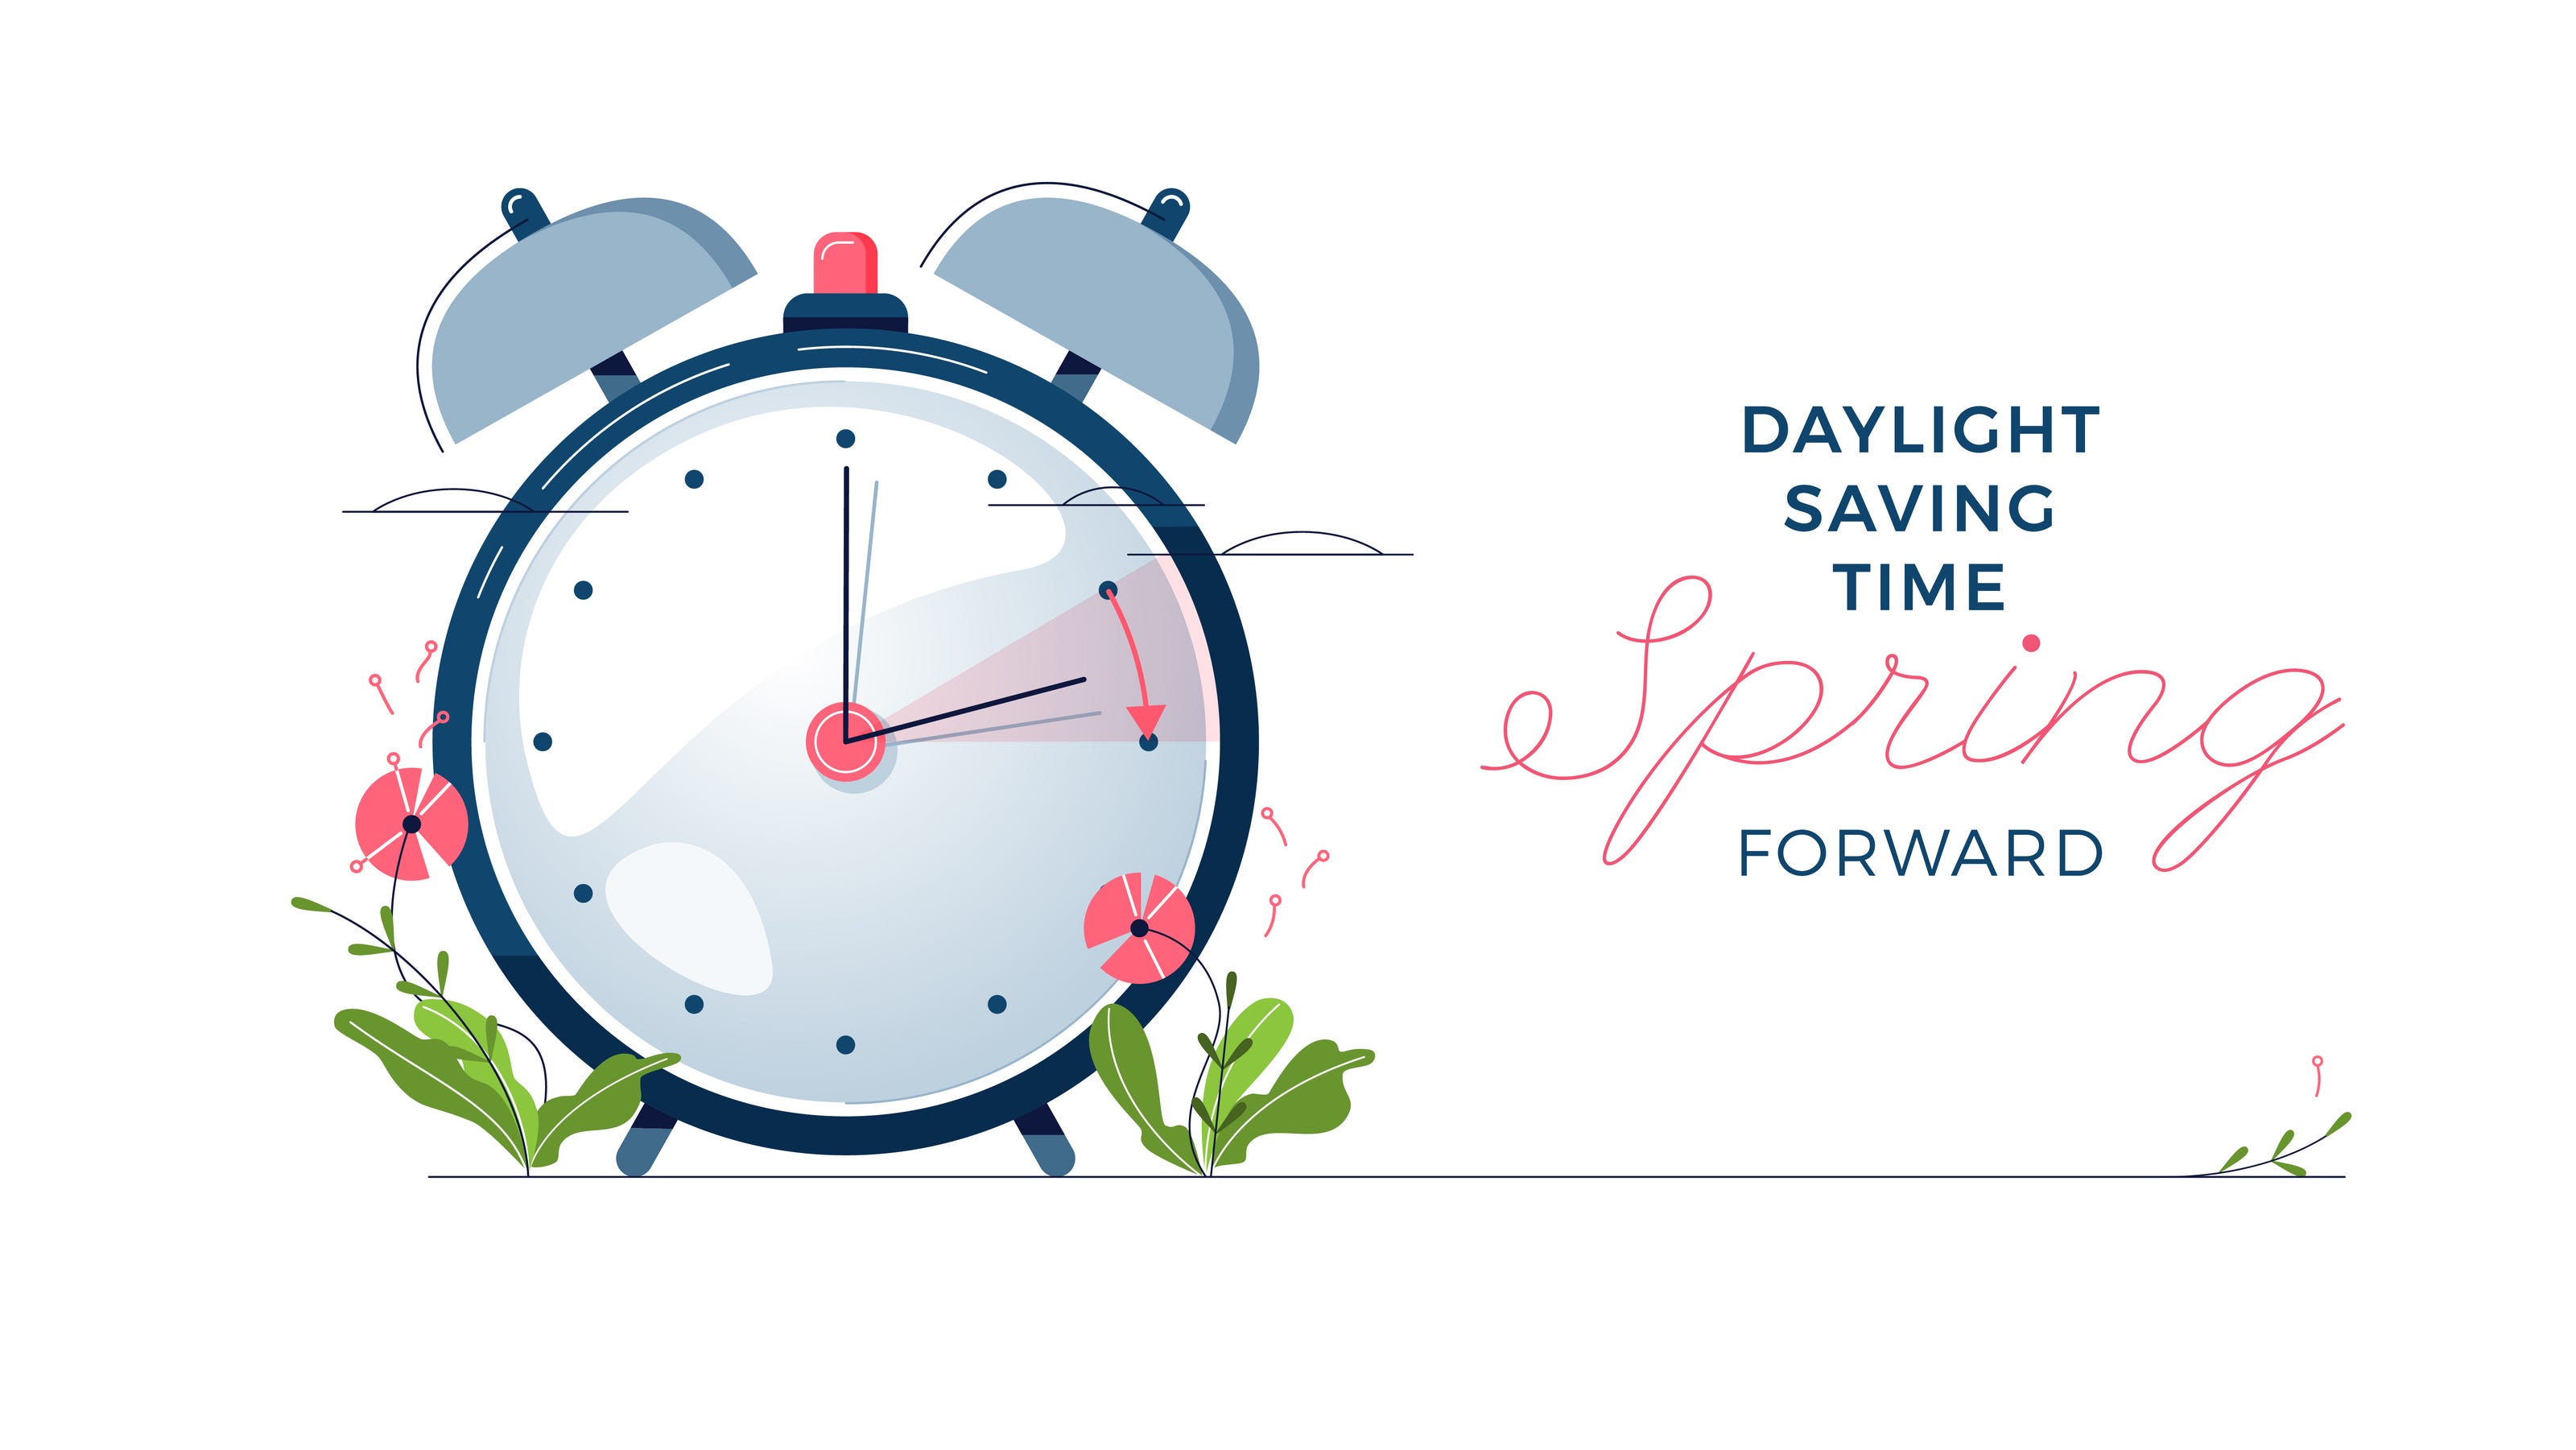 mål lærer overvældende Daylight Saving Time 2021 starts March 14, so push clocks ahead this weekend